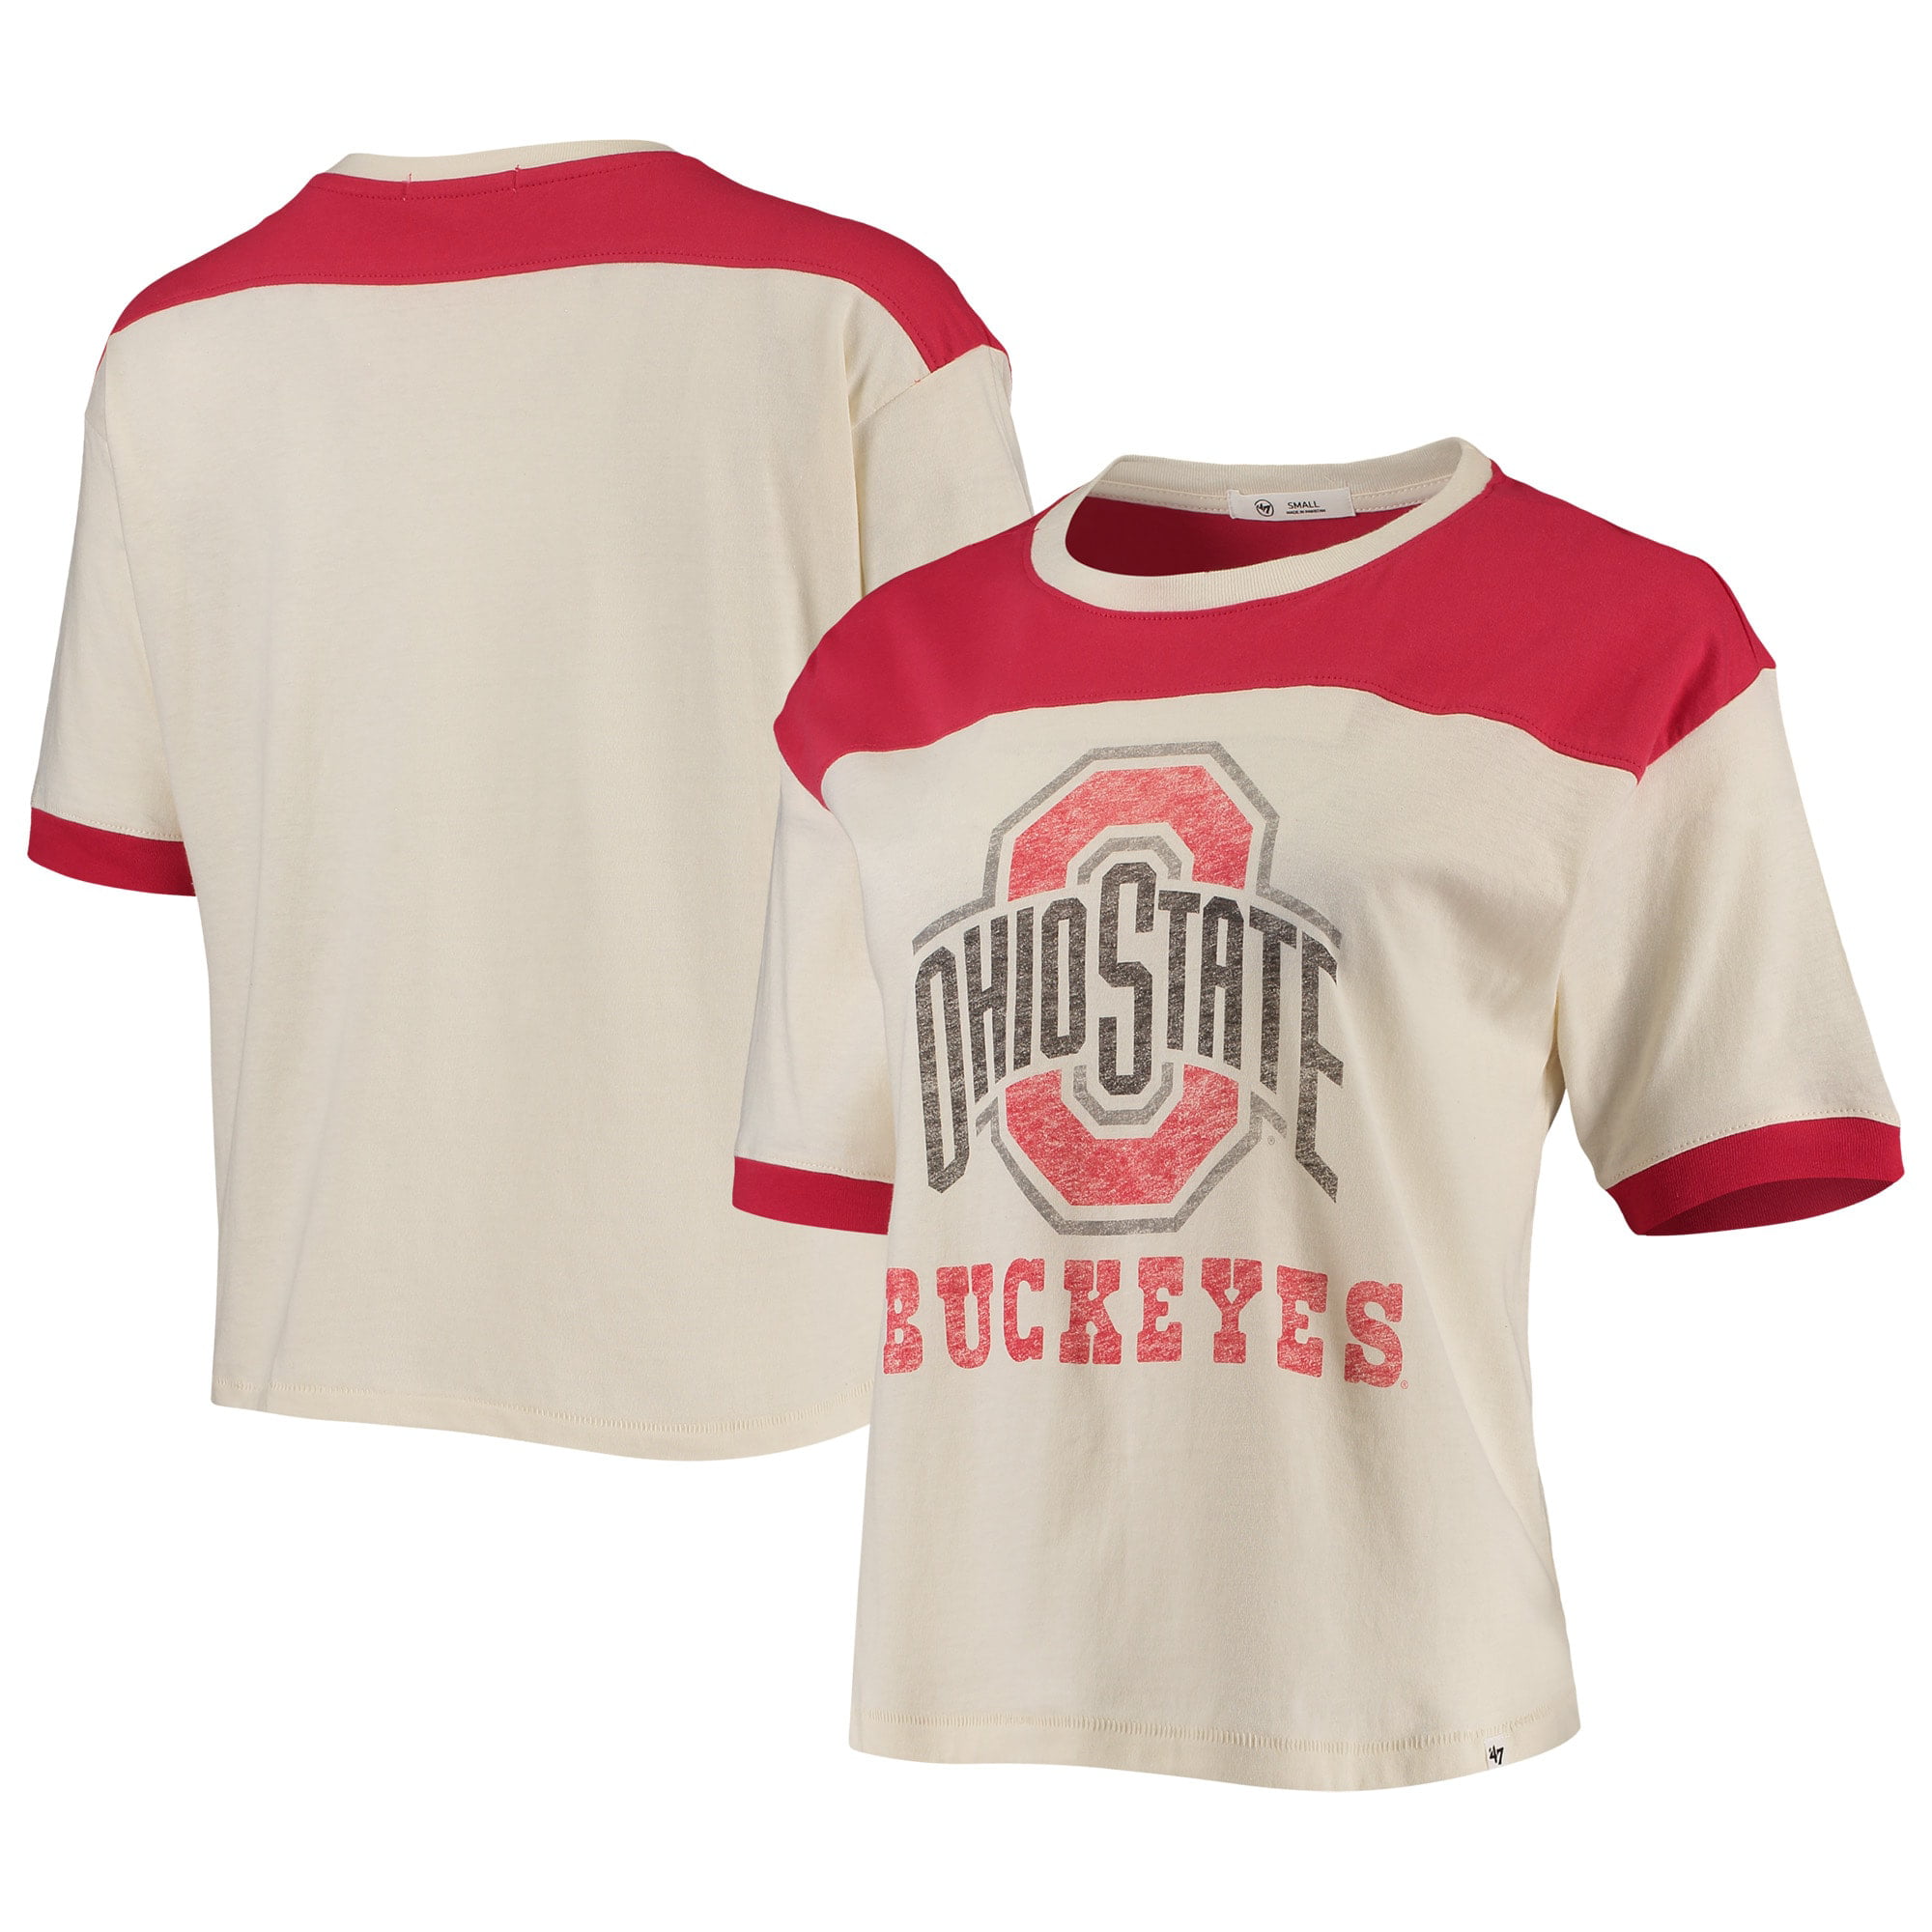 Vintage Ohio State Buckeyes Brutus T-Shirt Men’s Size XL EXCELLENT RARE